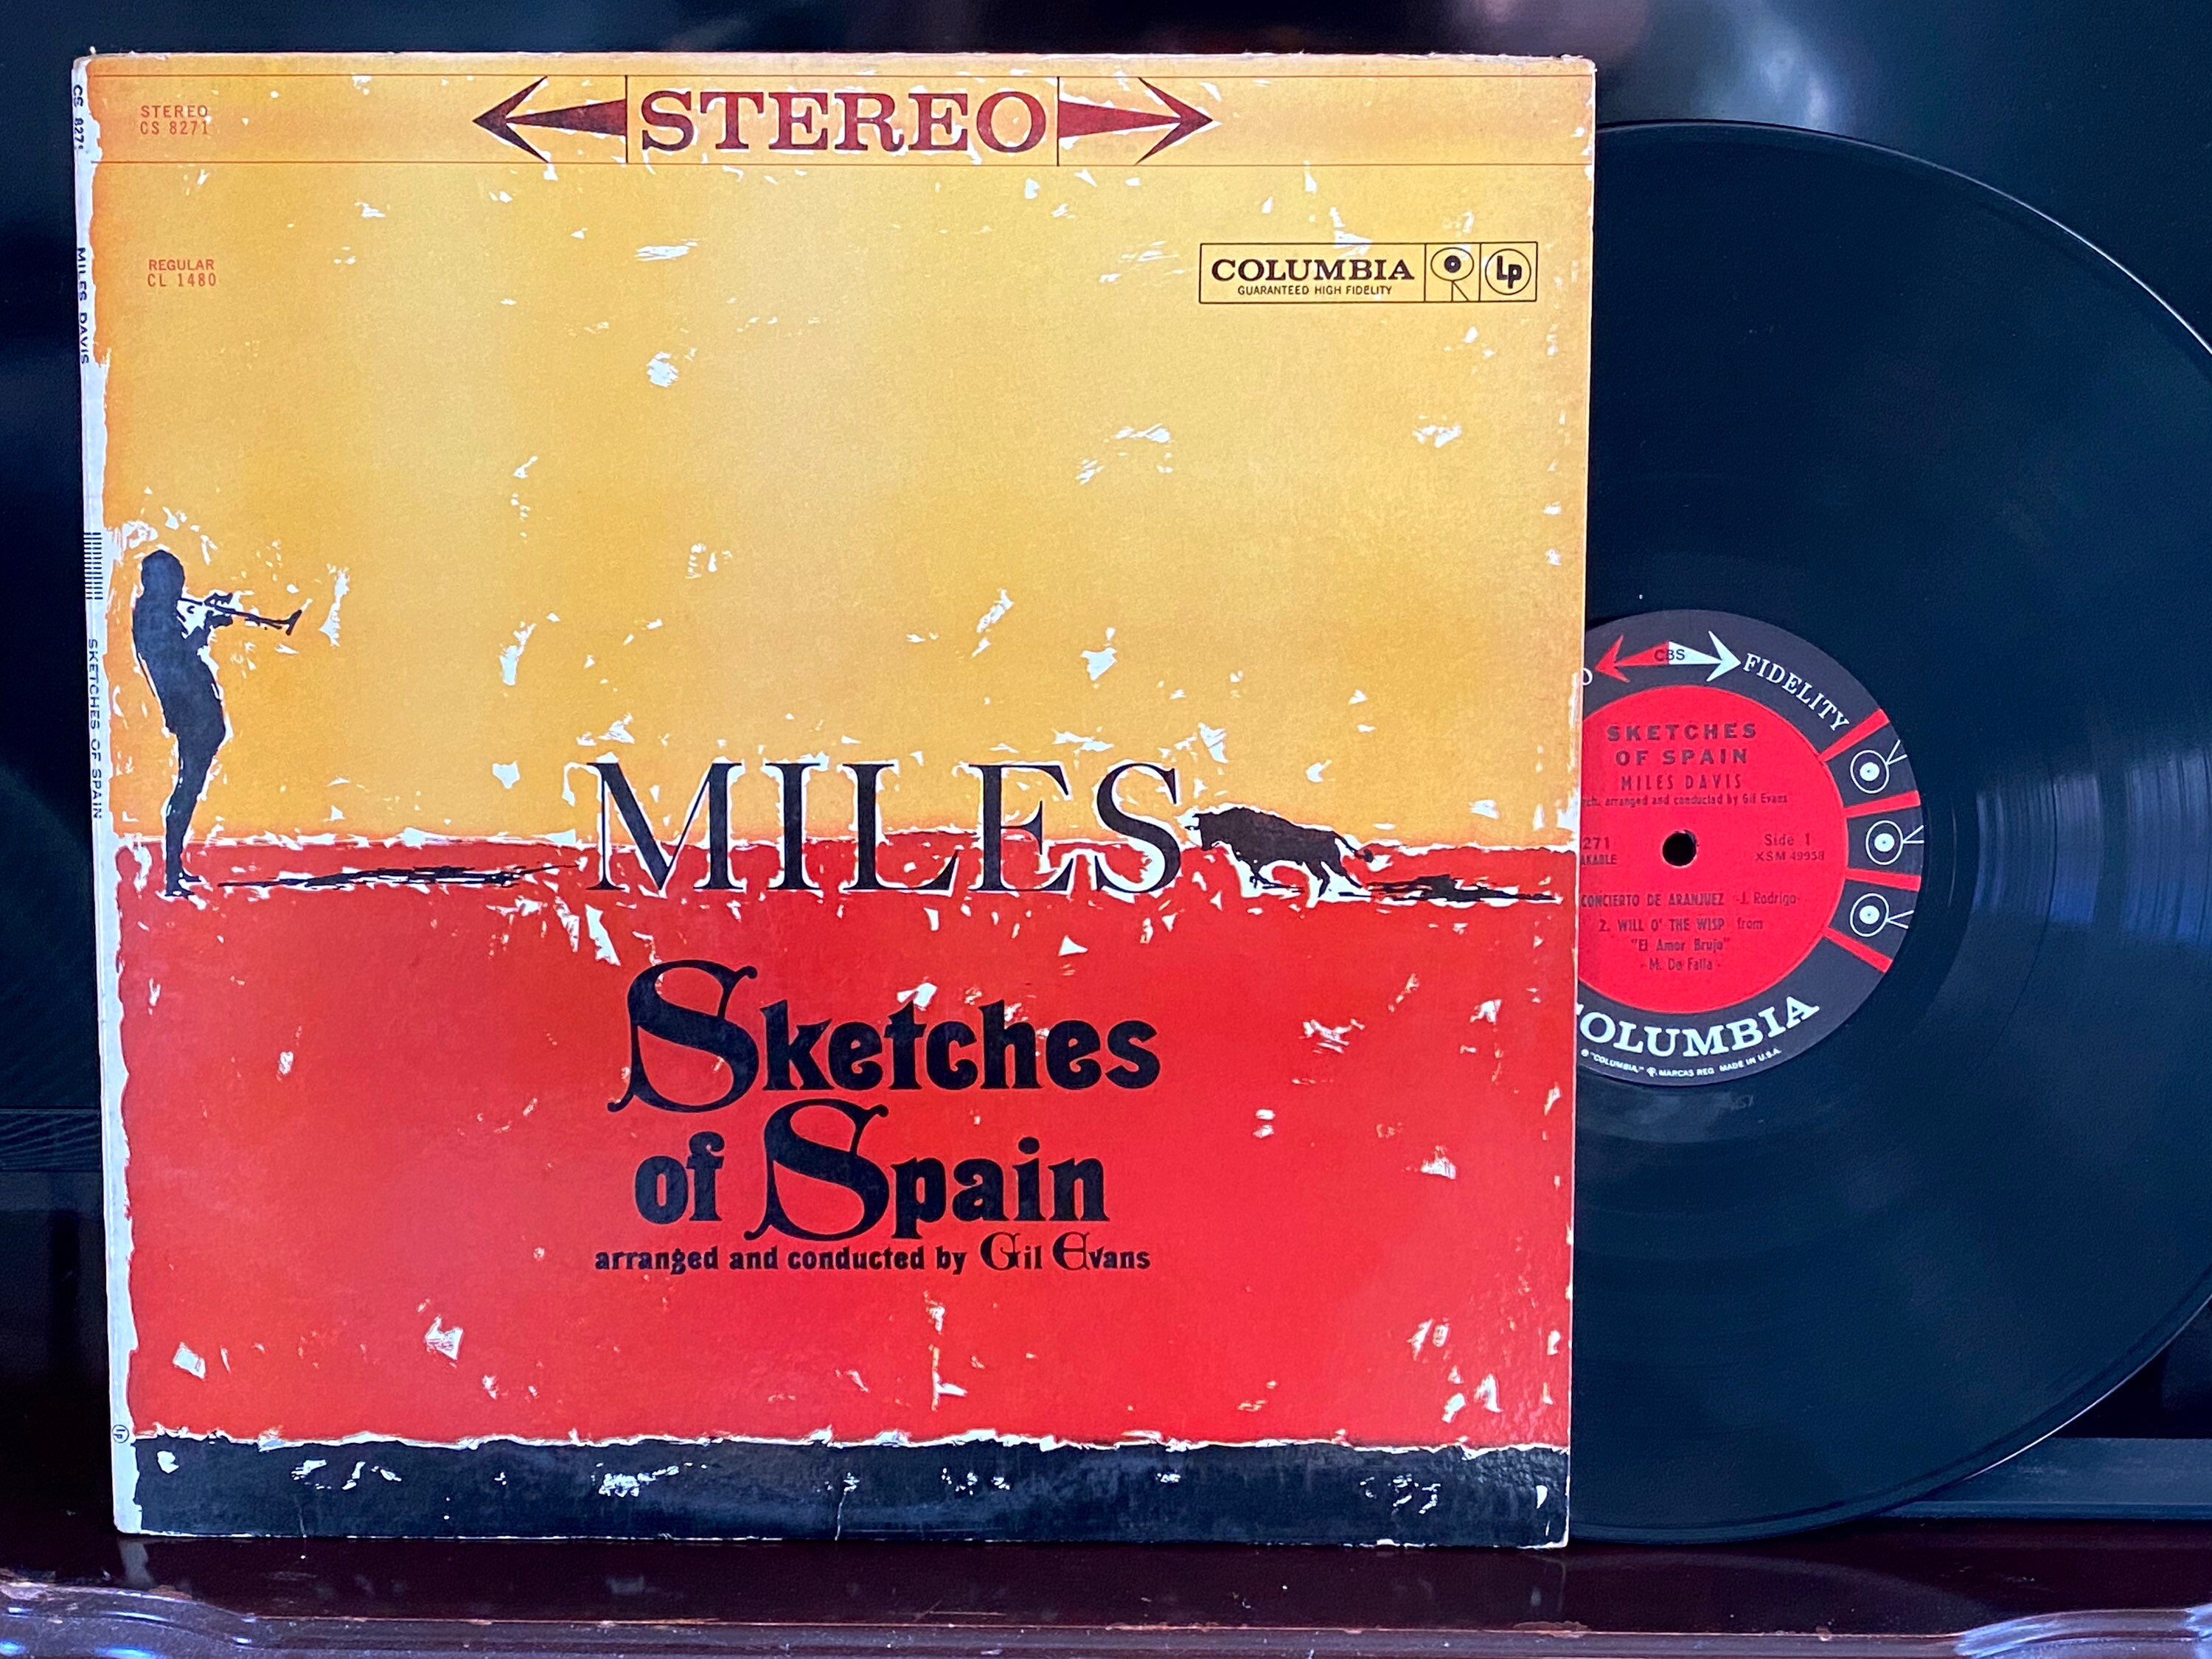 Lot of 12 Vintage Vinyl Records - Spanish Latin Music